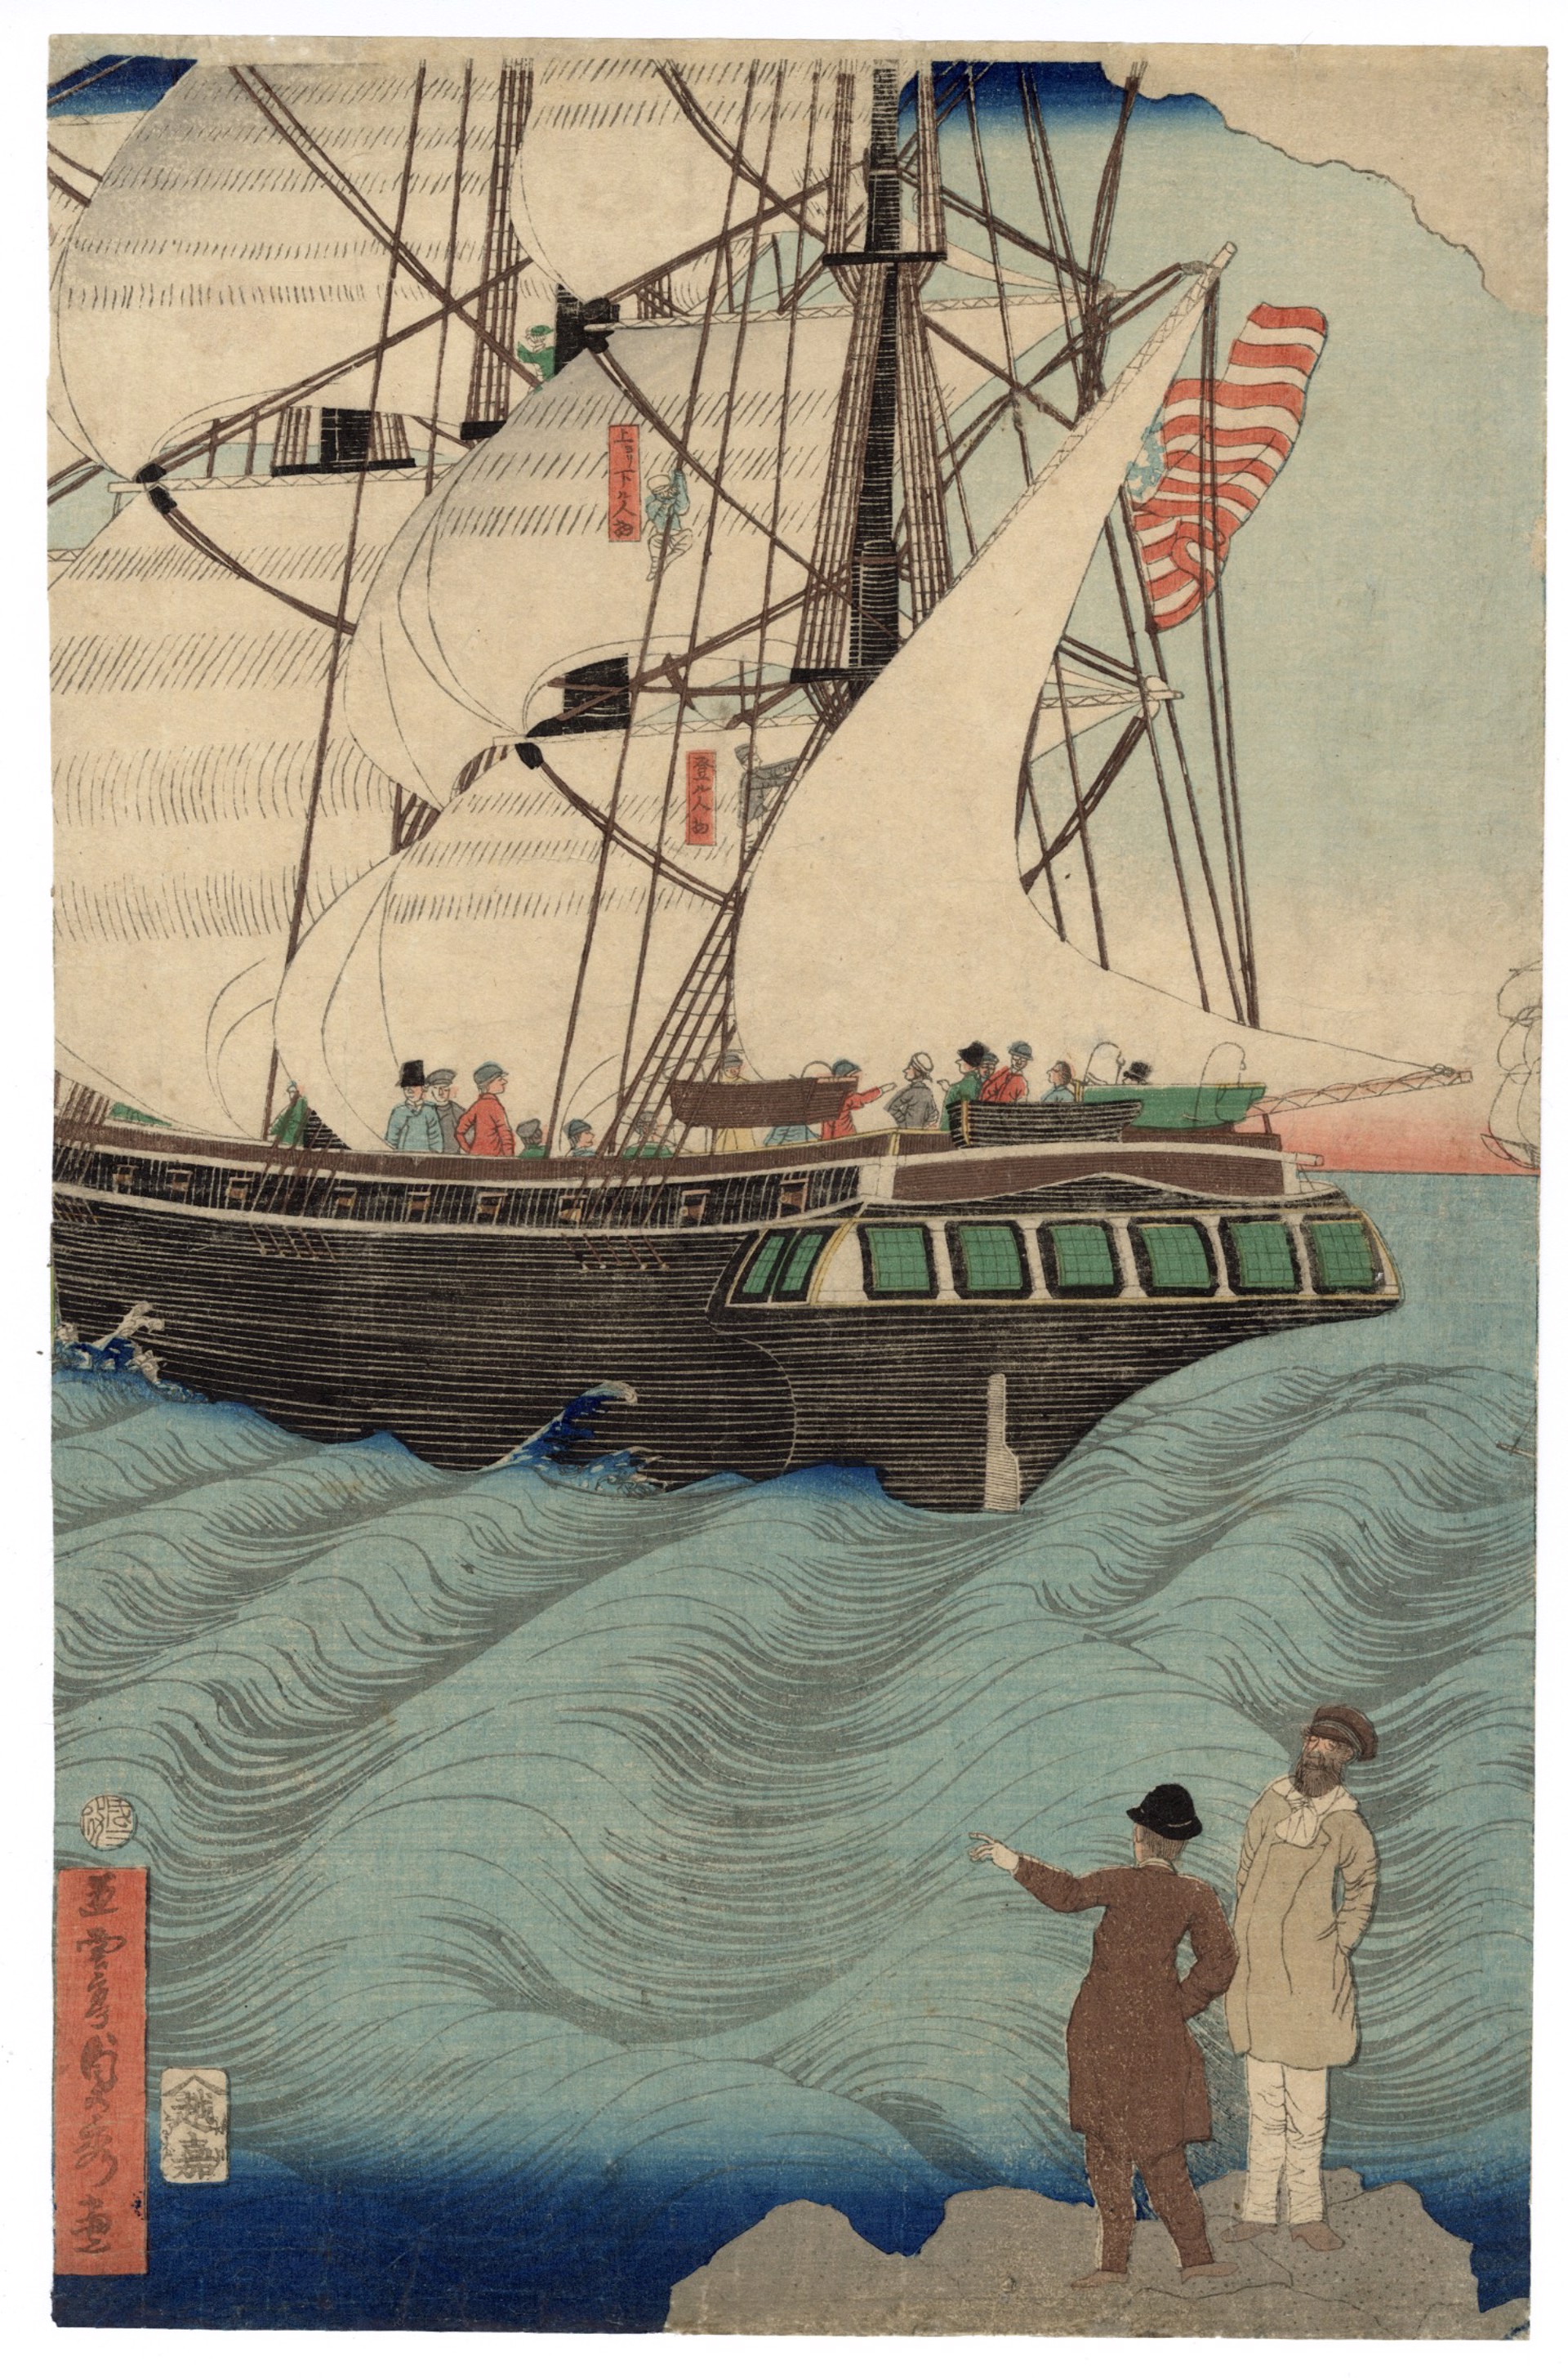 Black Ships Departing California for Japan by Sadahide